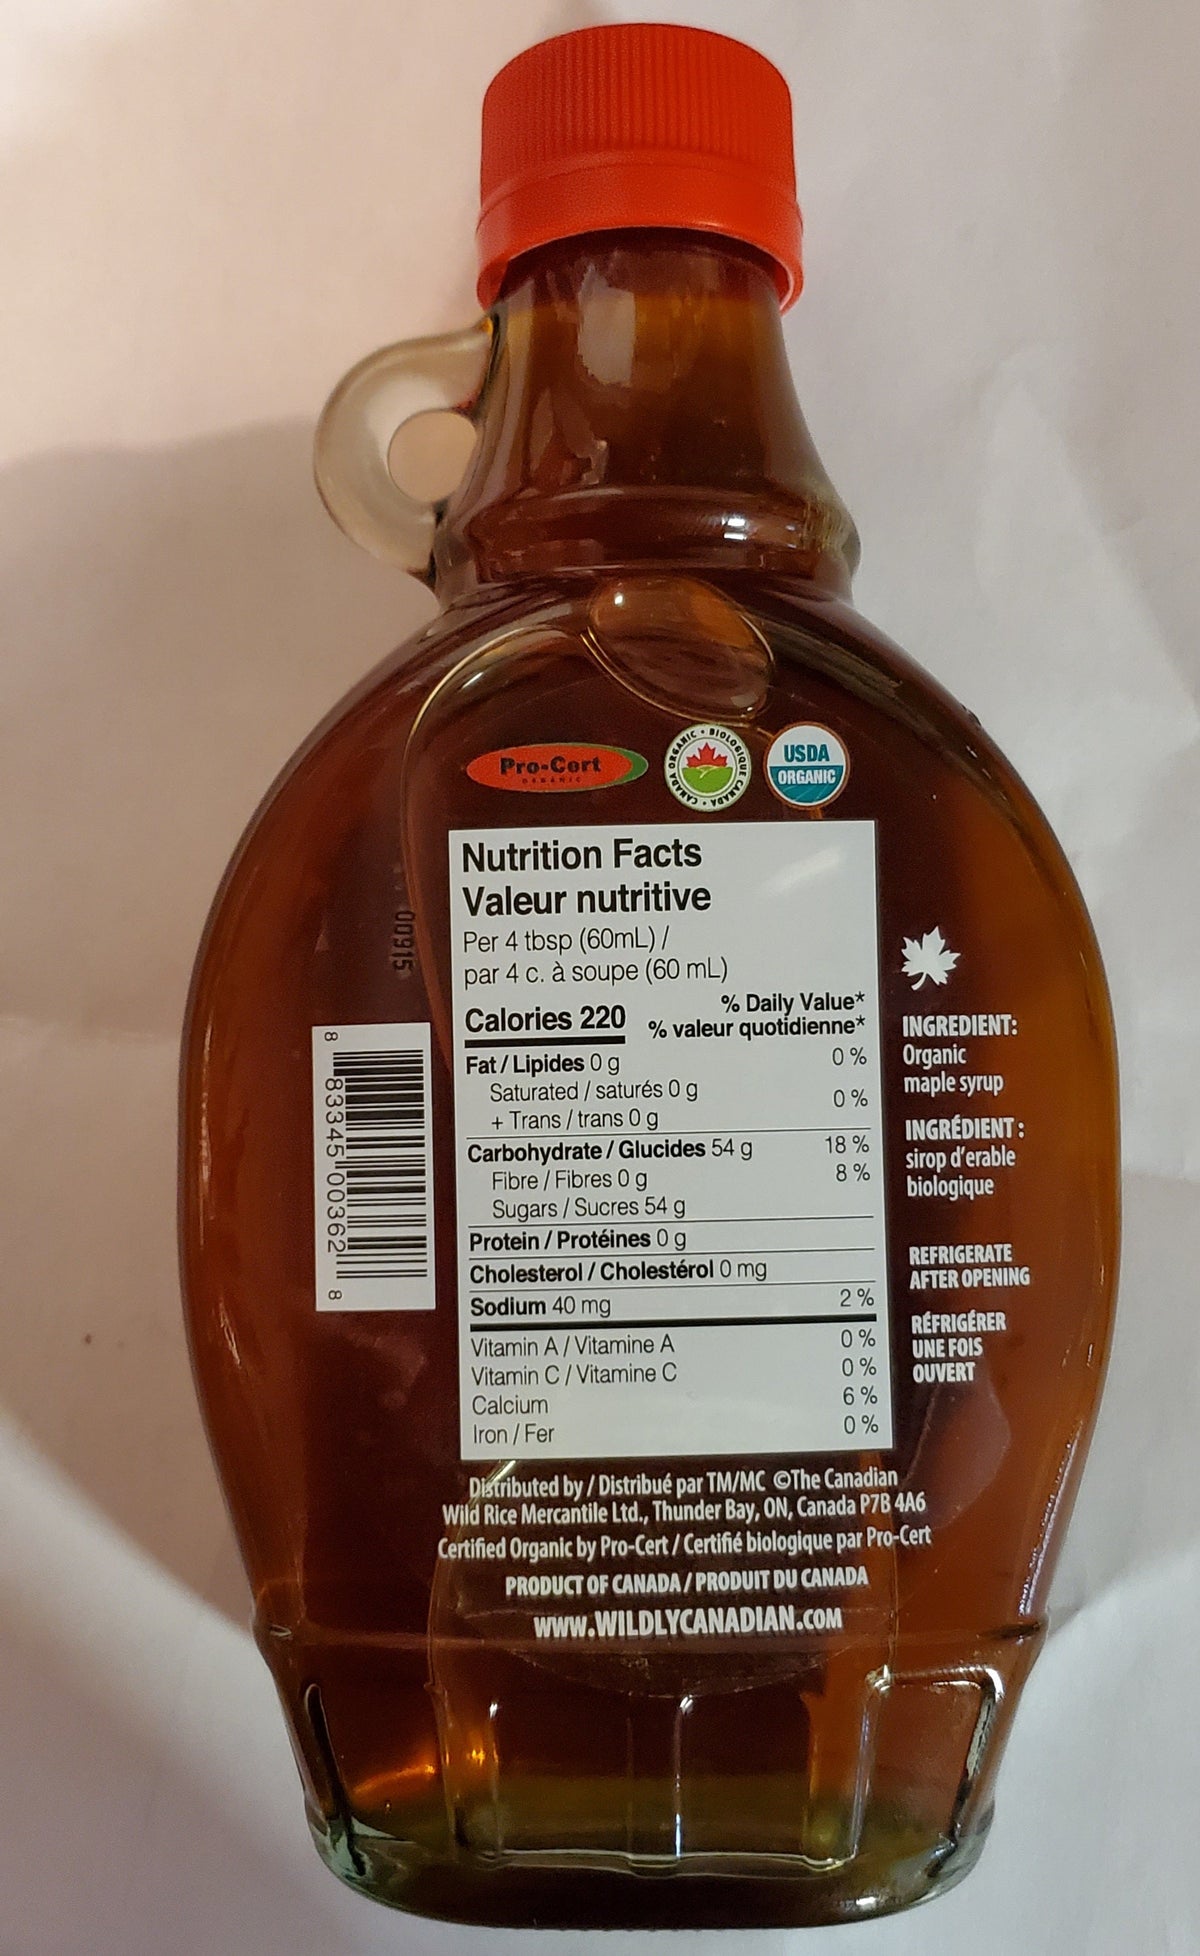 Organic Maple Syrup (250ml)